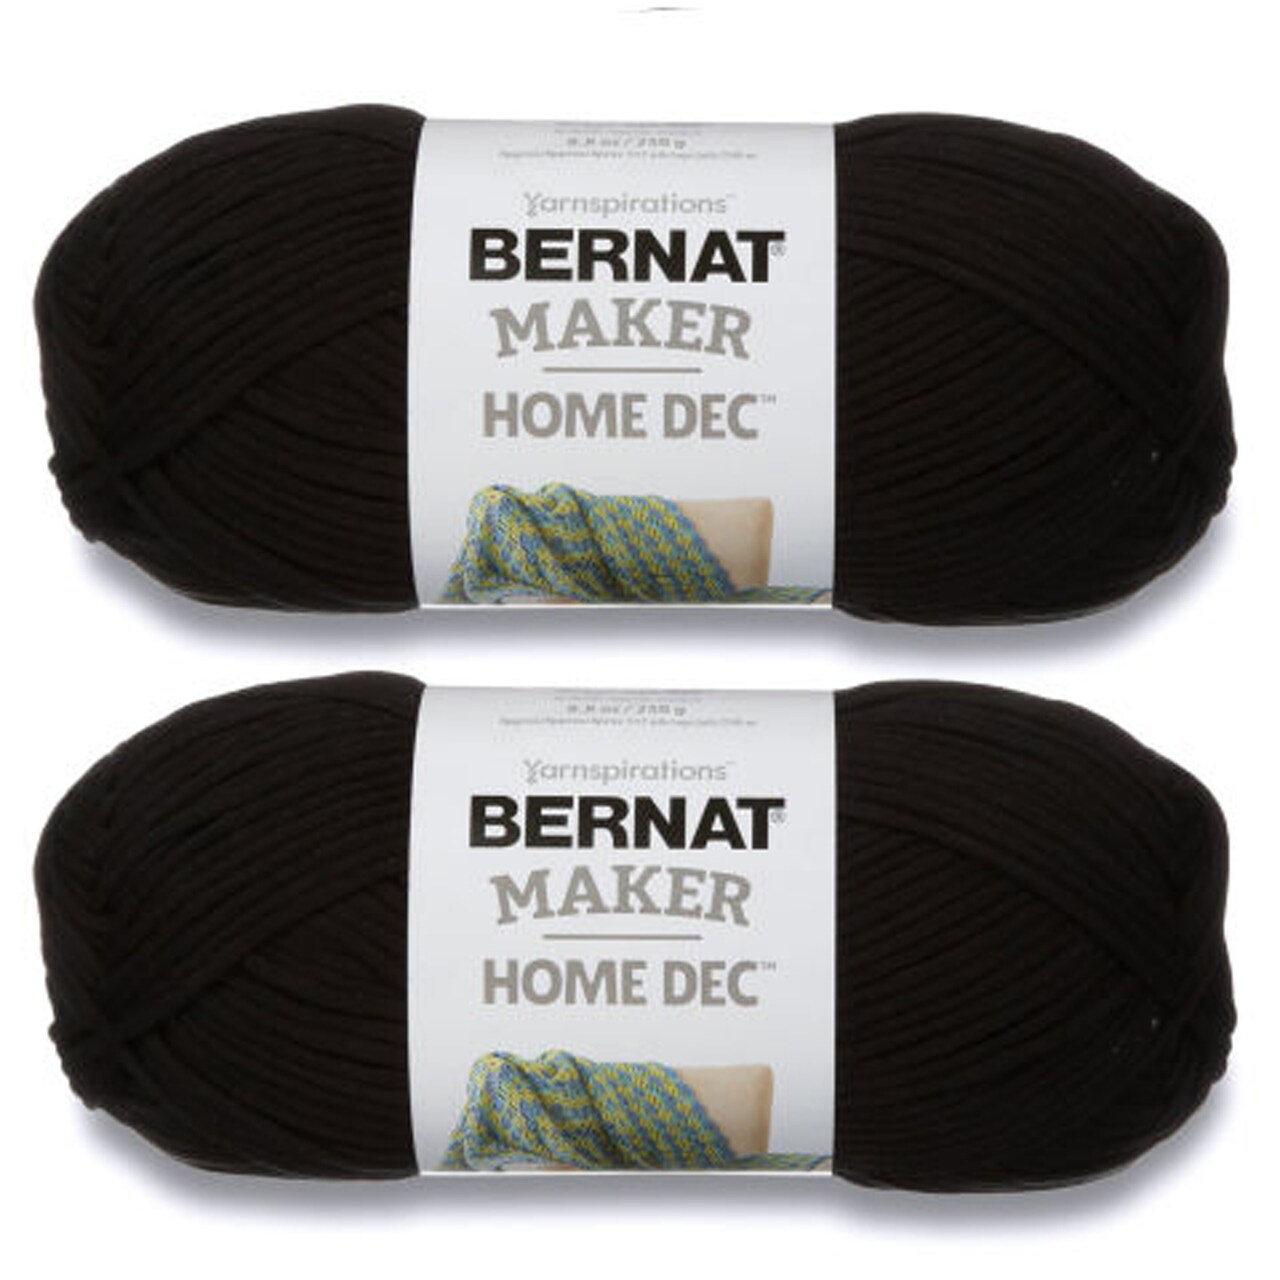 Bernat Maker Home Dec Black Yarn - 2 Pack of 250g/8.8oz - Cotton